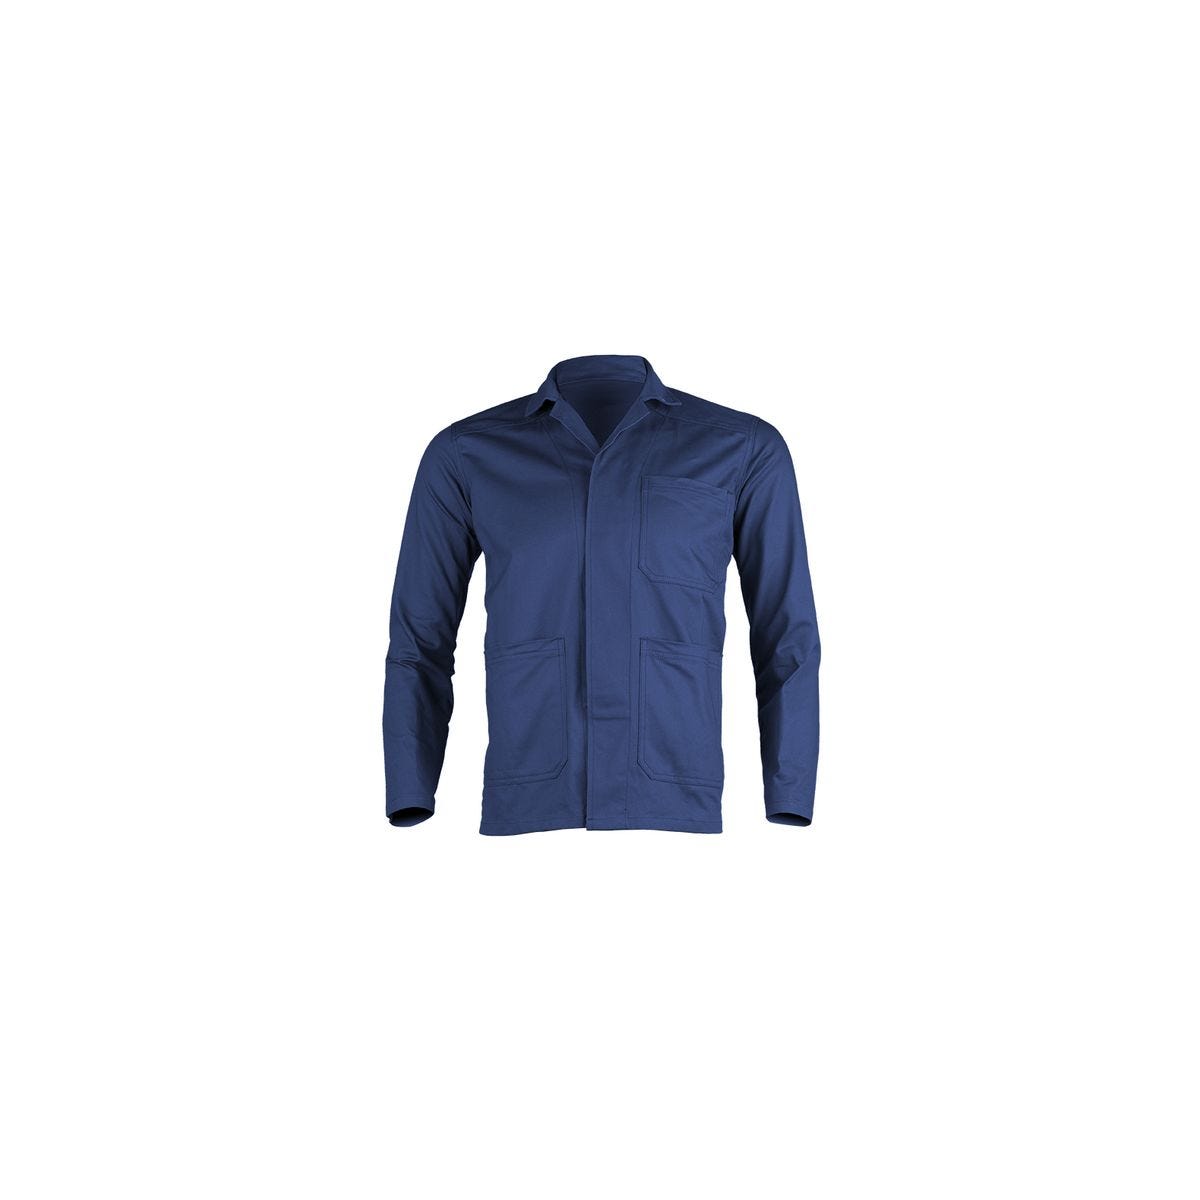 INDUSTRY Veste, bleu royal, 65%PES/35%PES, 245 g/m² - COVERGUARD - Taille M 0